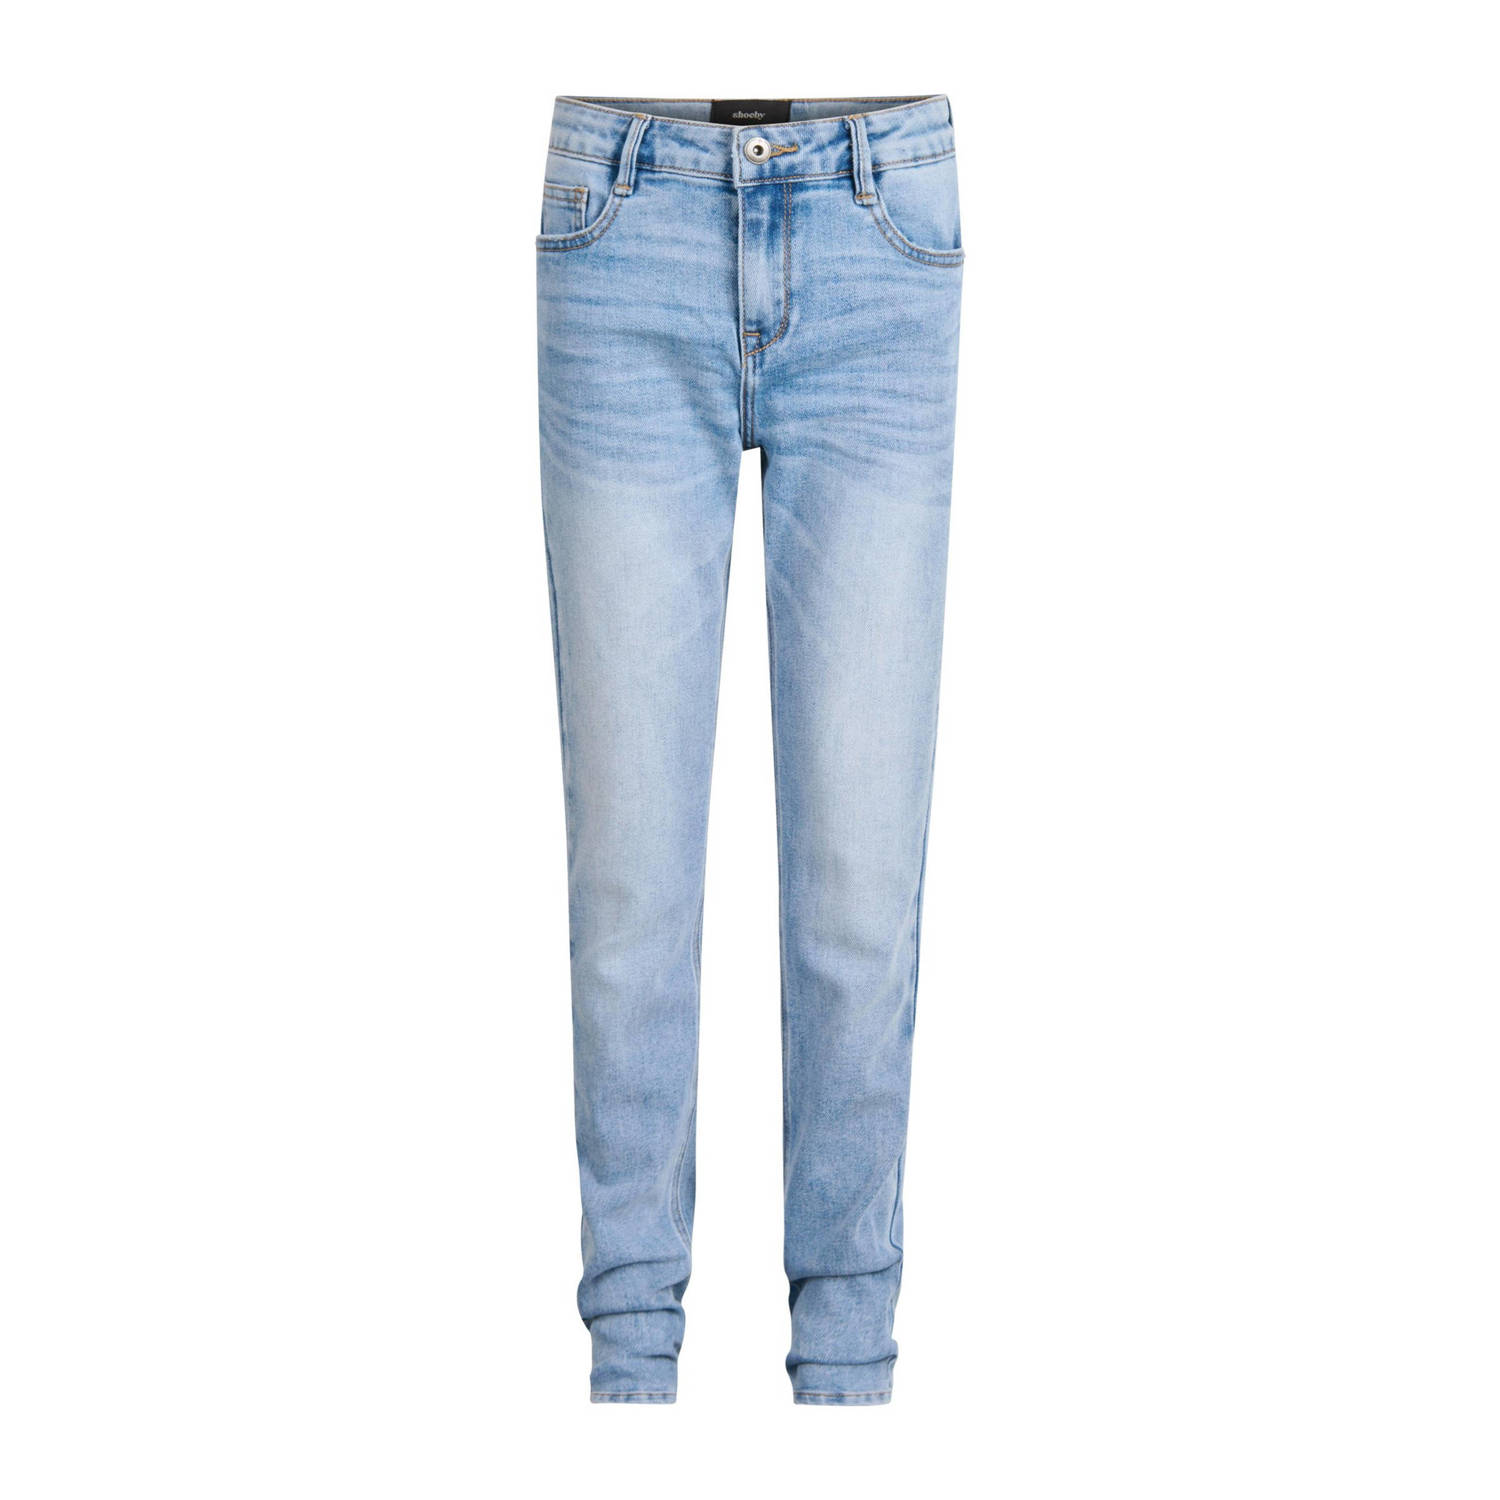 Shoeby regular fit jeans light blue